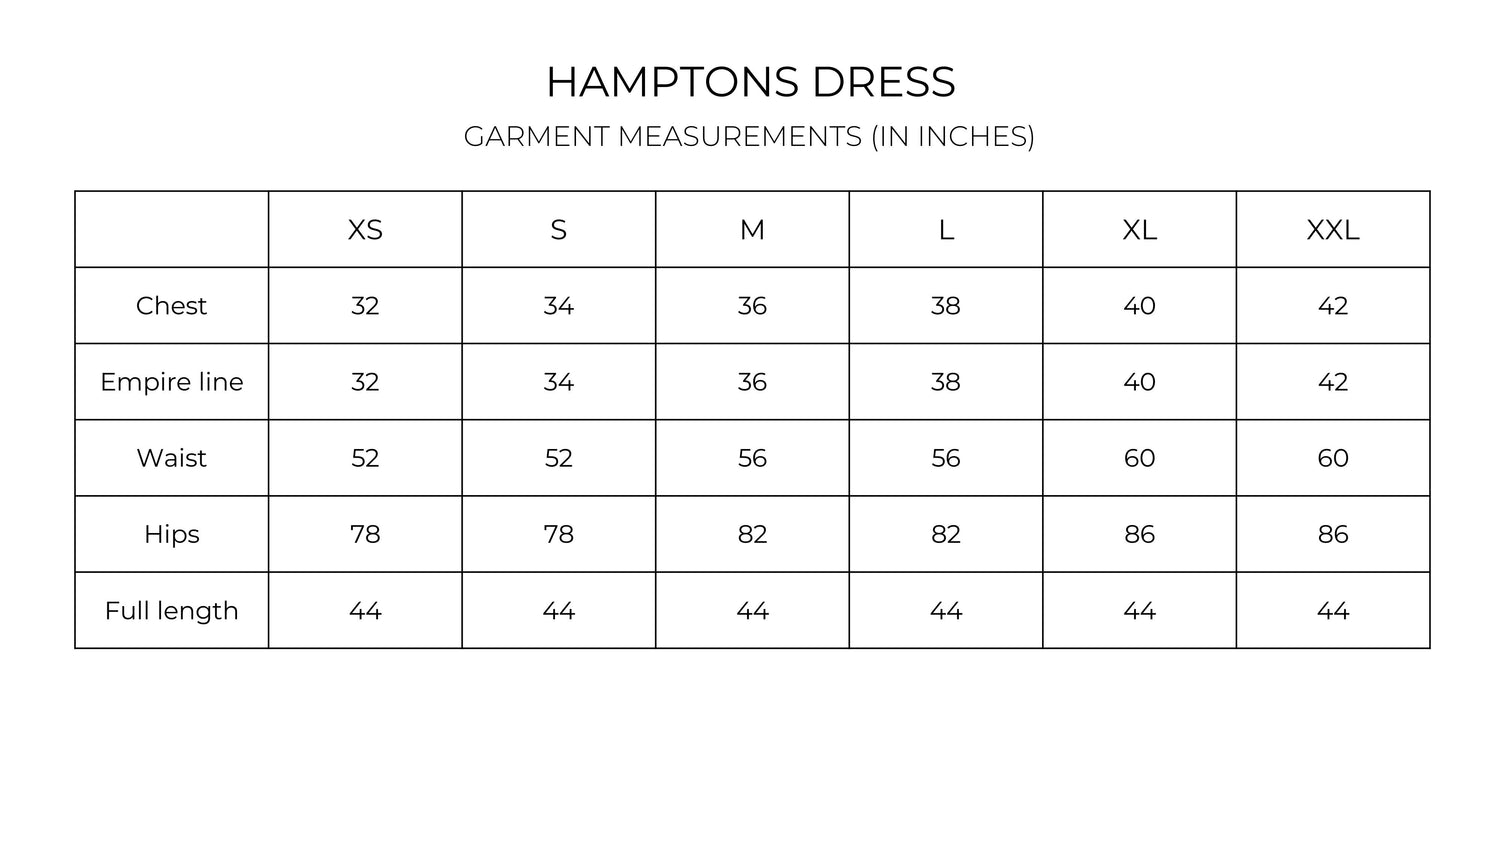 Hamptons dress